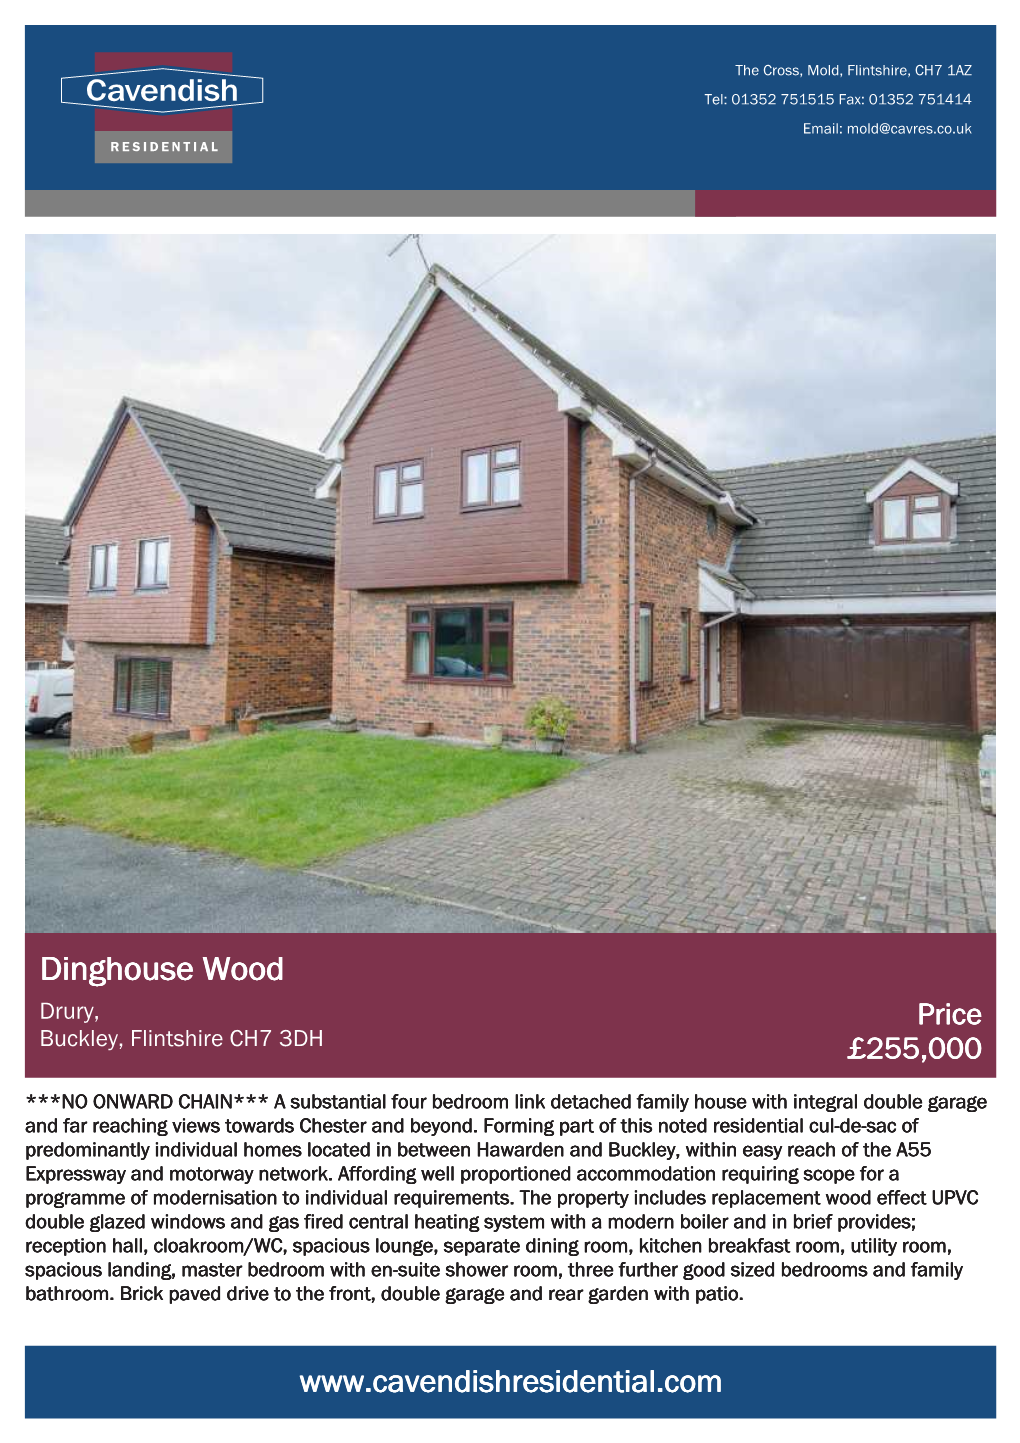 Dinghouse Wood Drury, Price Buckley, Flintshire CH7 3DH £255,000